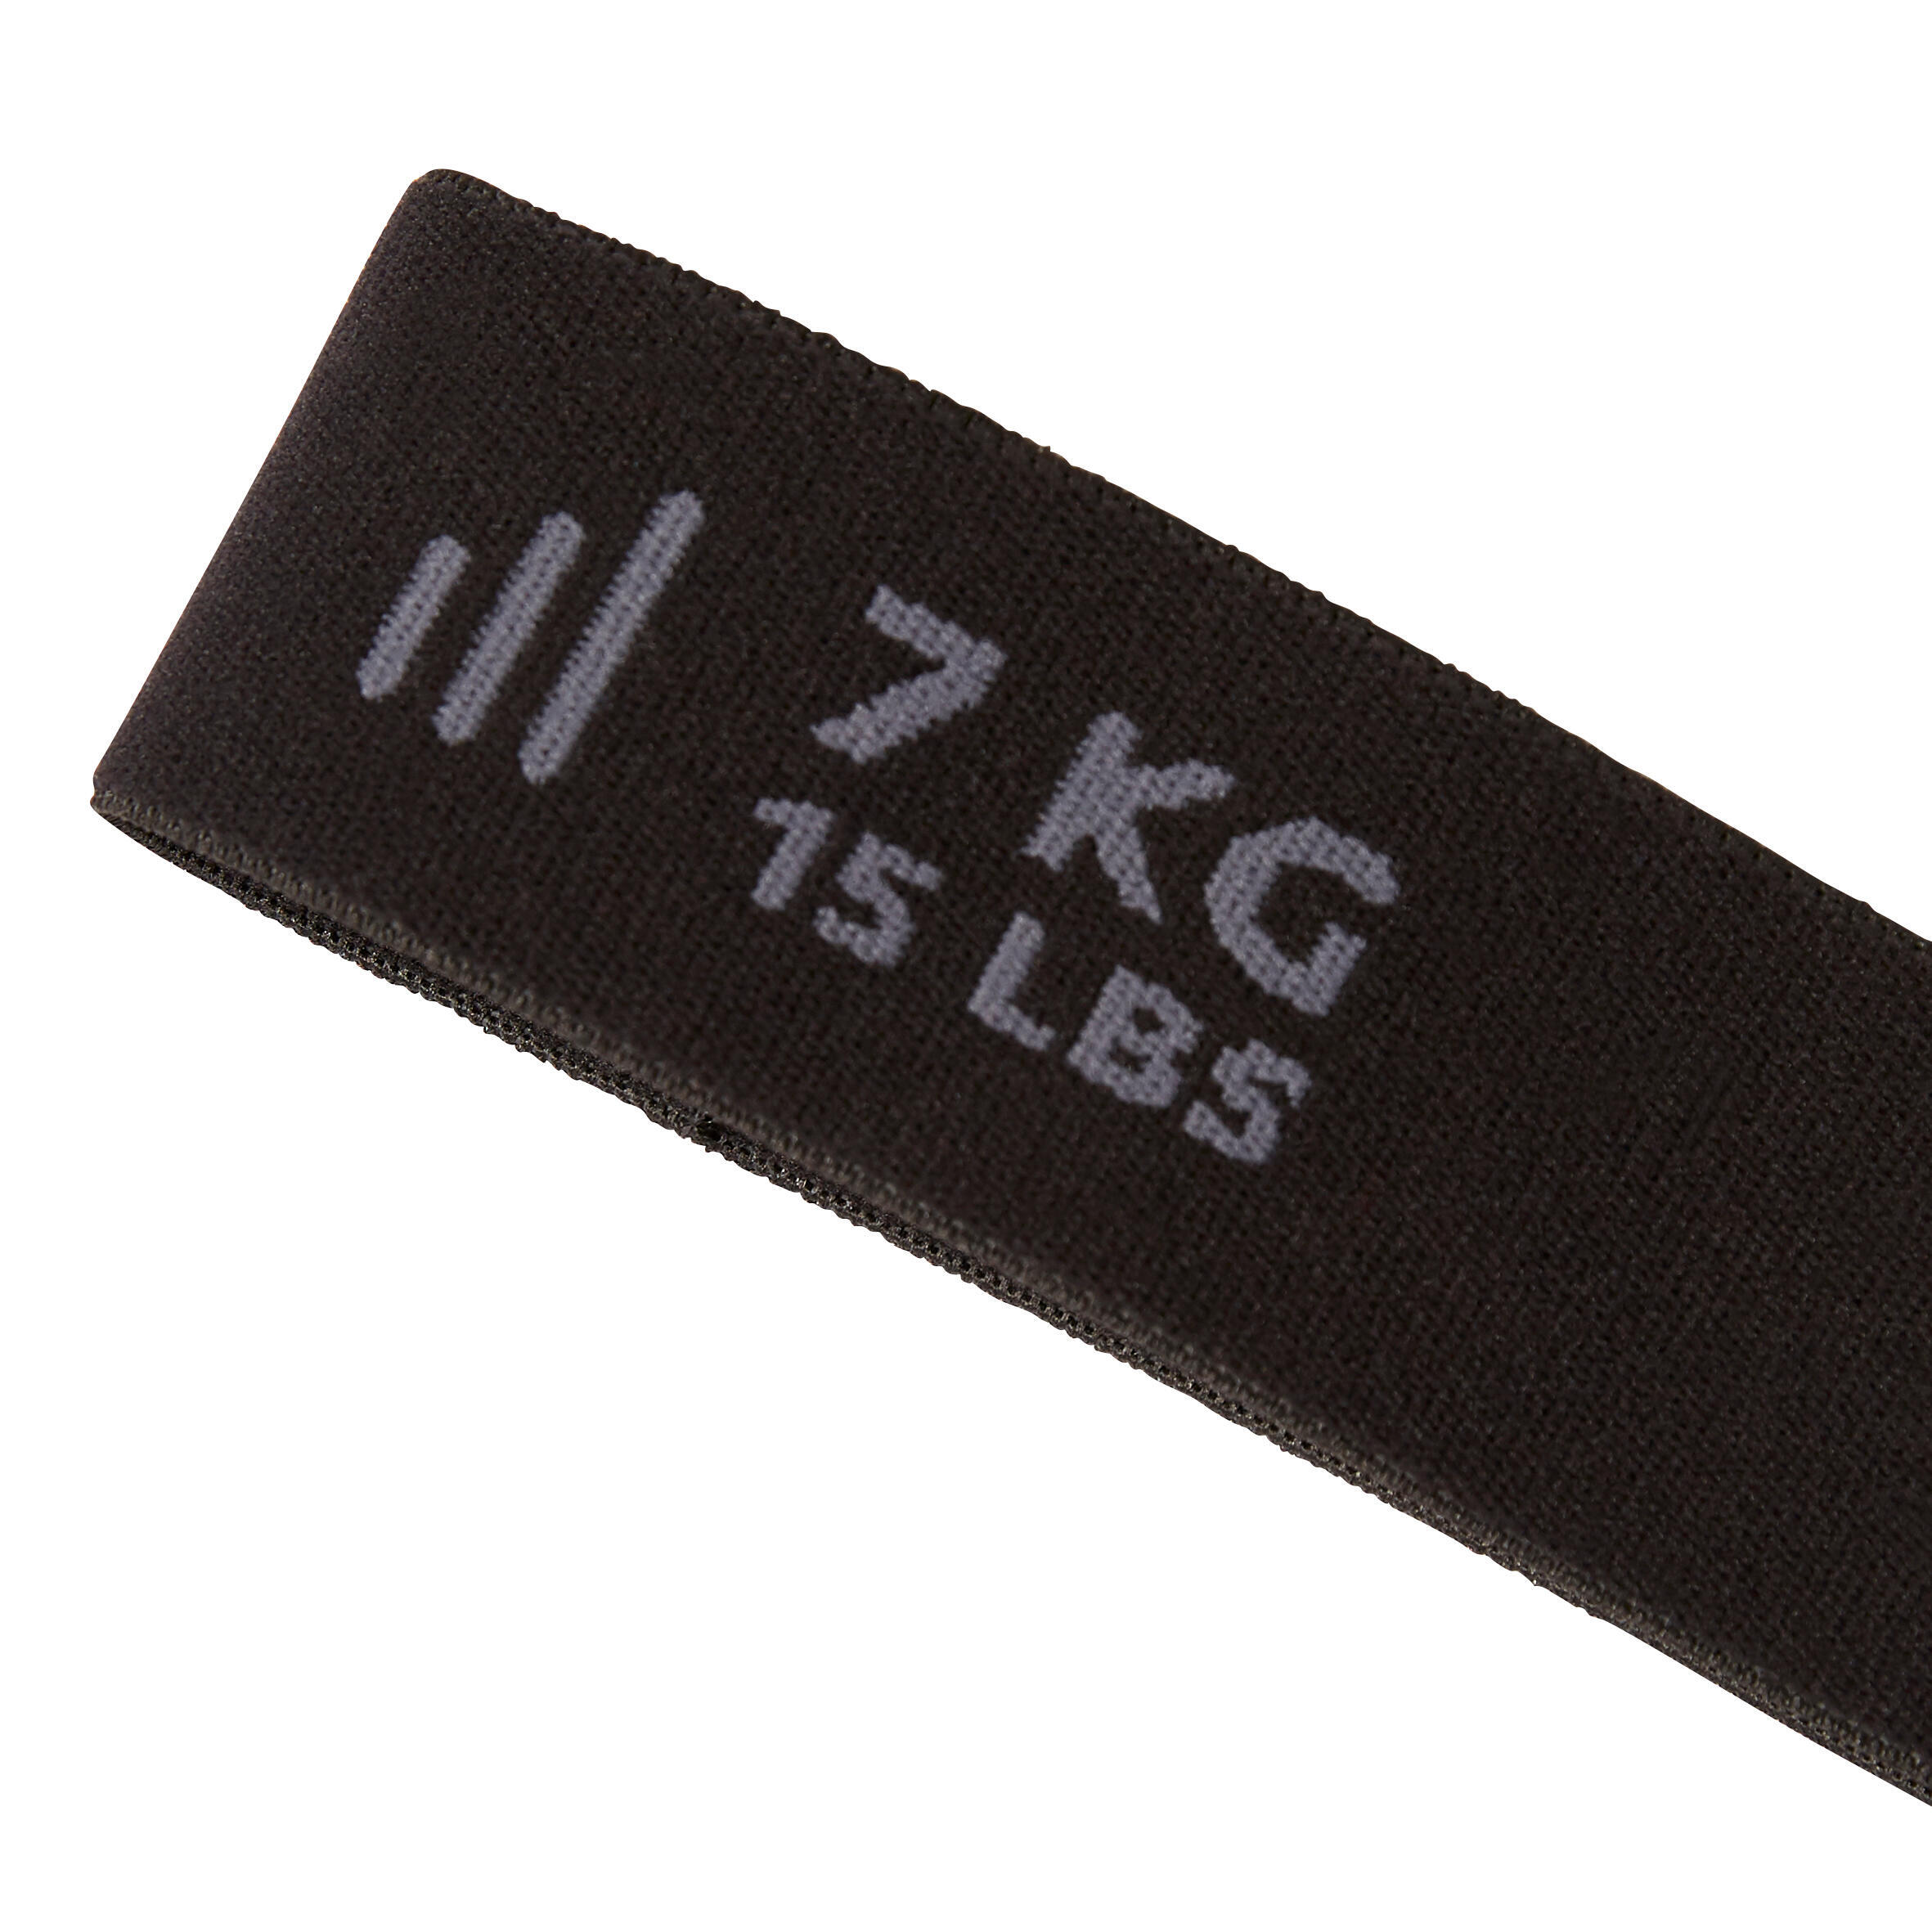 Fitness 7 kg Fabric Mini Resistance Band - Black 4/5